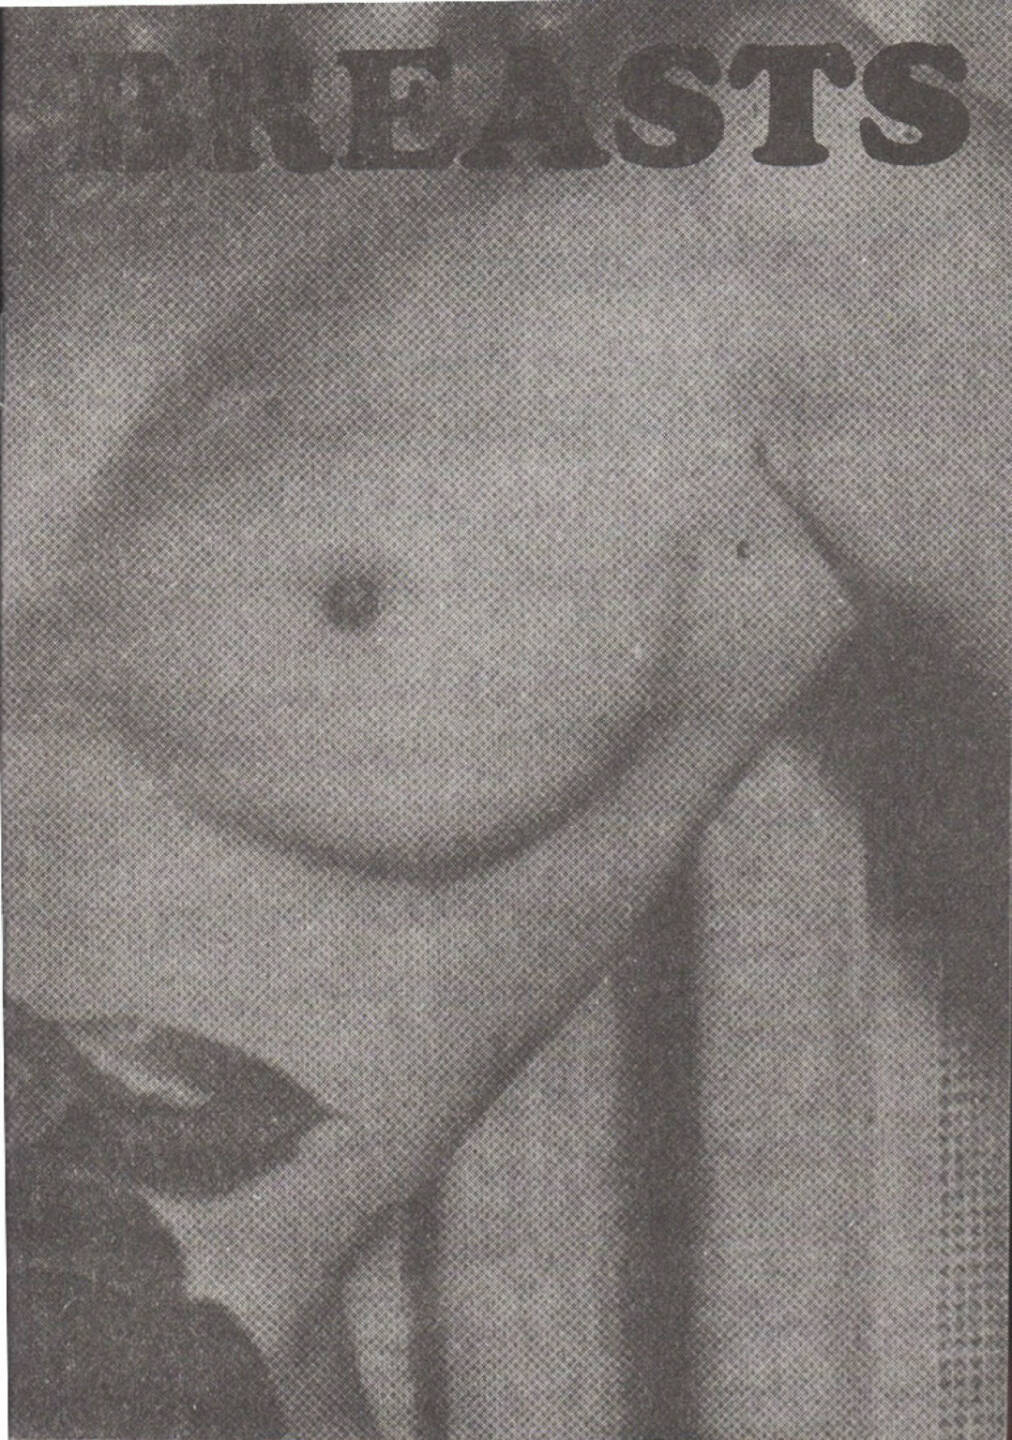 Jurgen Maelfeyt - Breasts, Art Paper Editions 2013, Cover - http://josefchladek.com/book/jurgen_maelfeyt_-_breasts